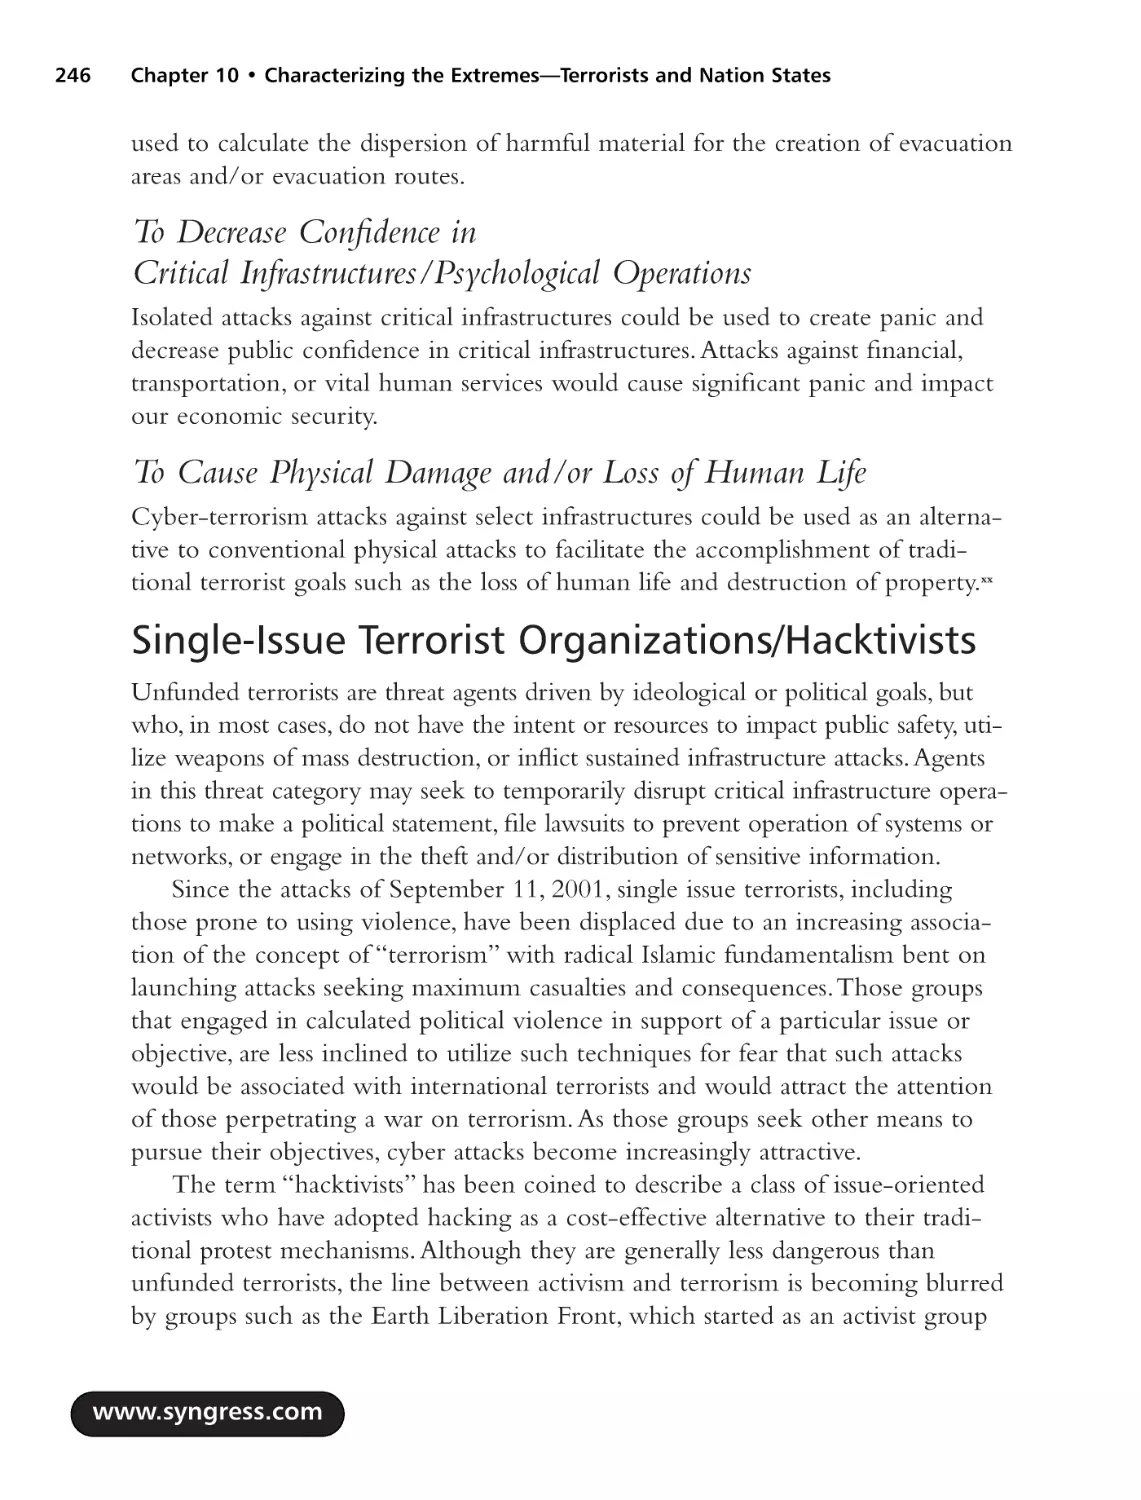 Single-Issue Terrorist Organizations/Hacktivists